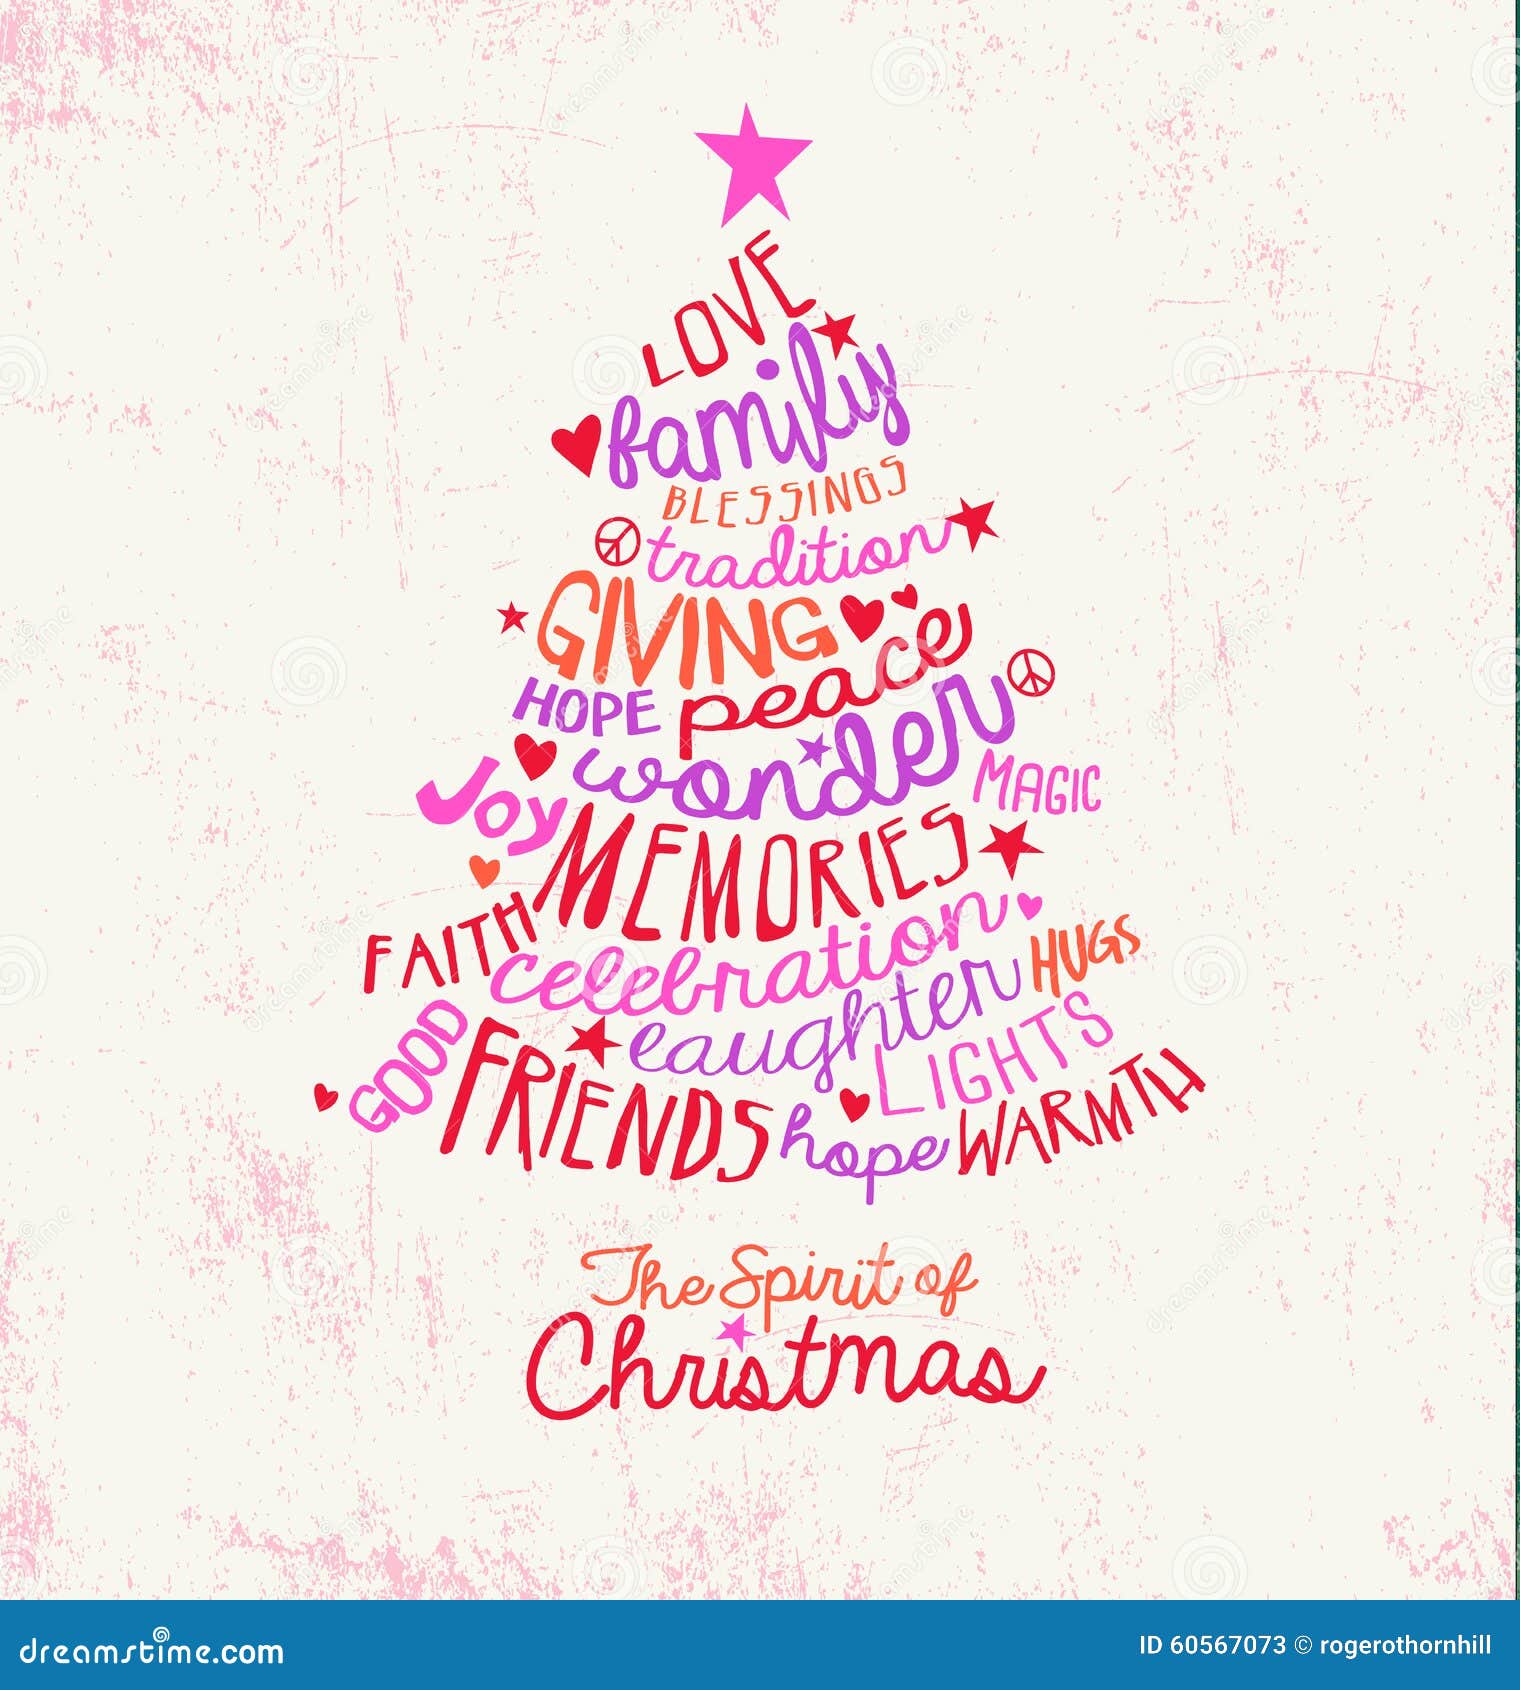 Handwritten Word Cloud Christmas Tree Greeting Card Design 